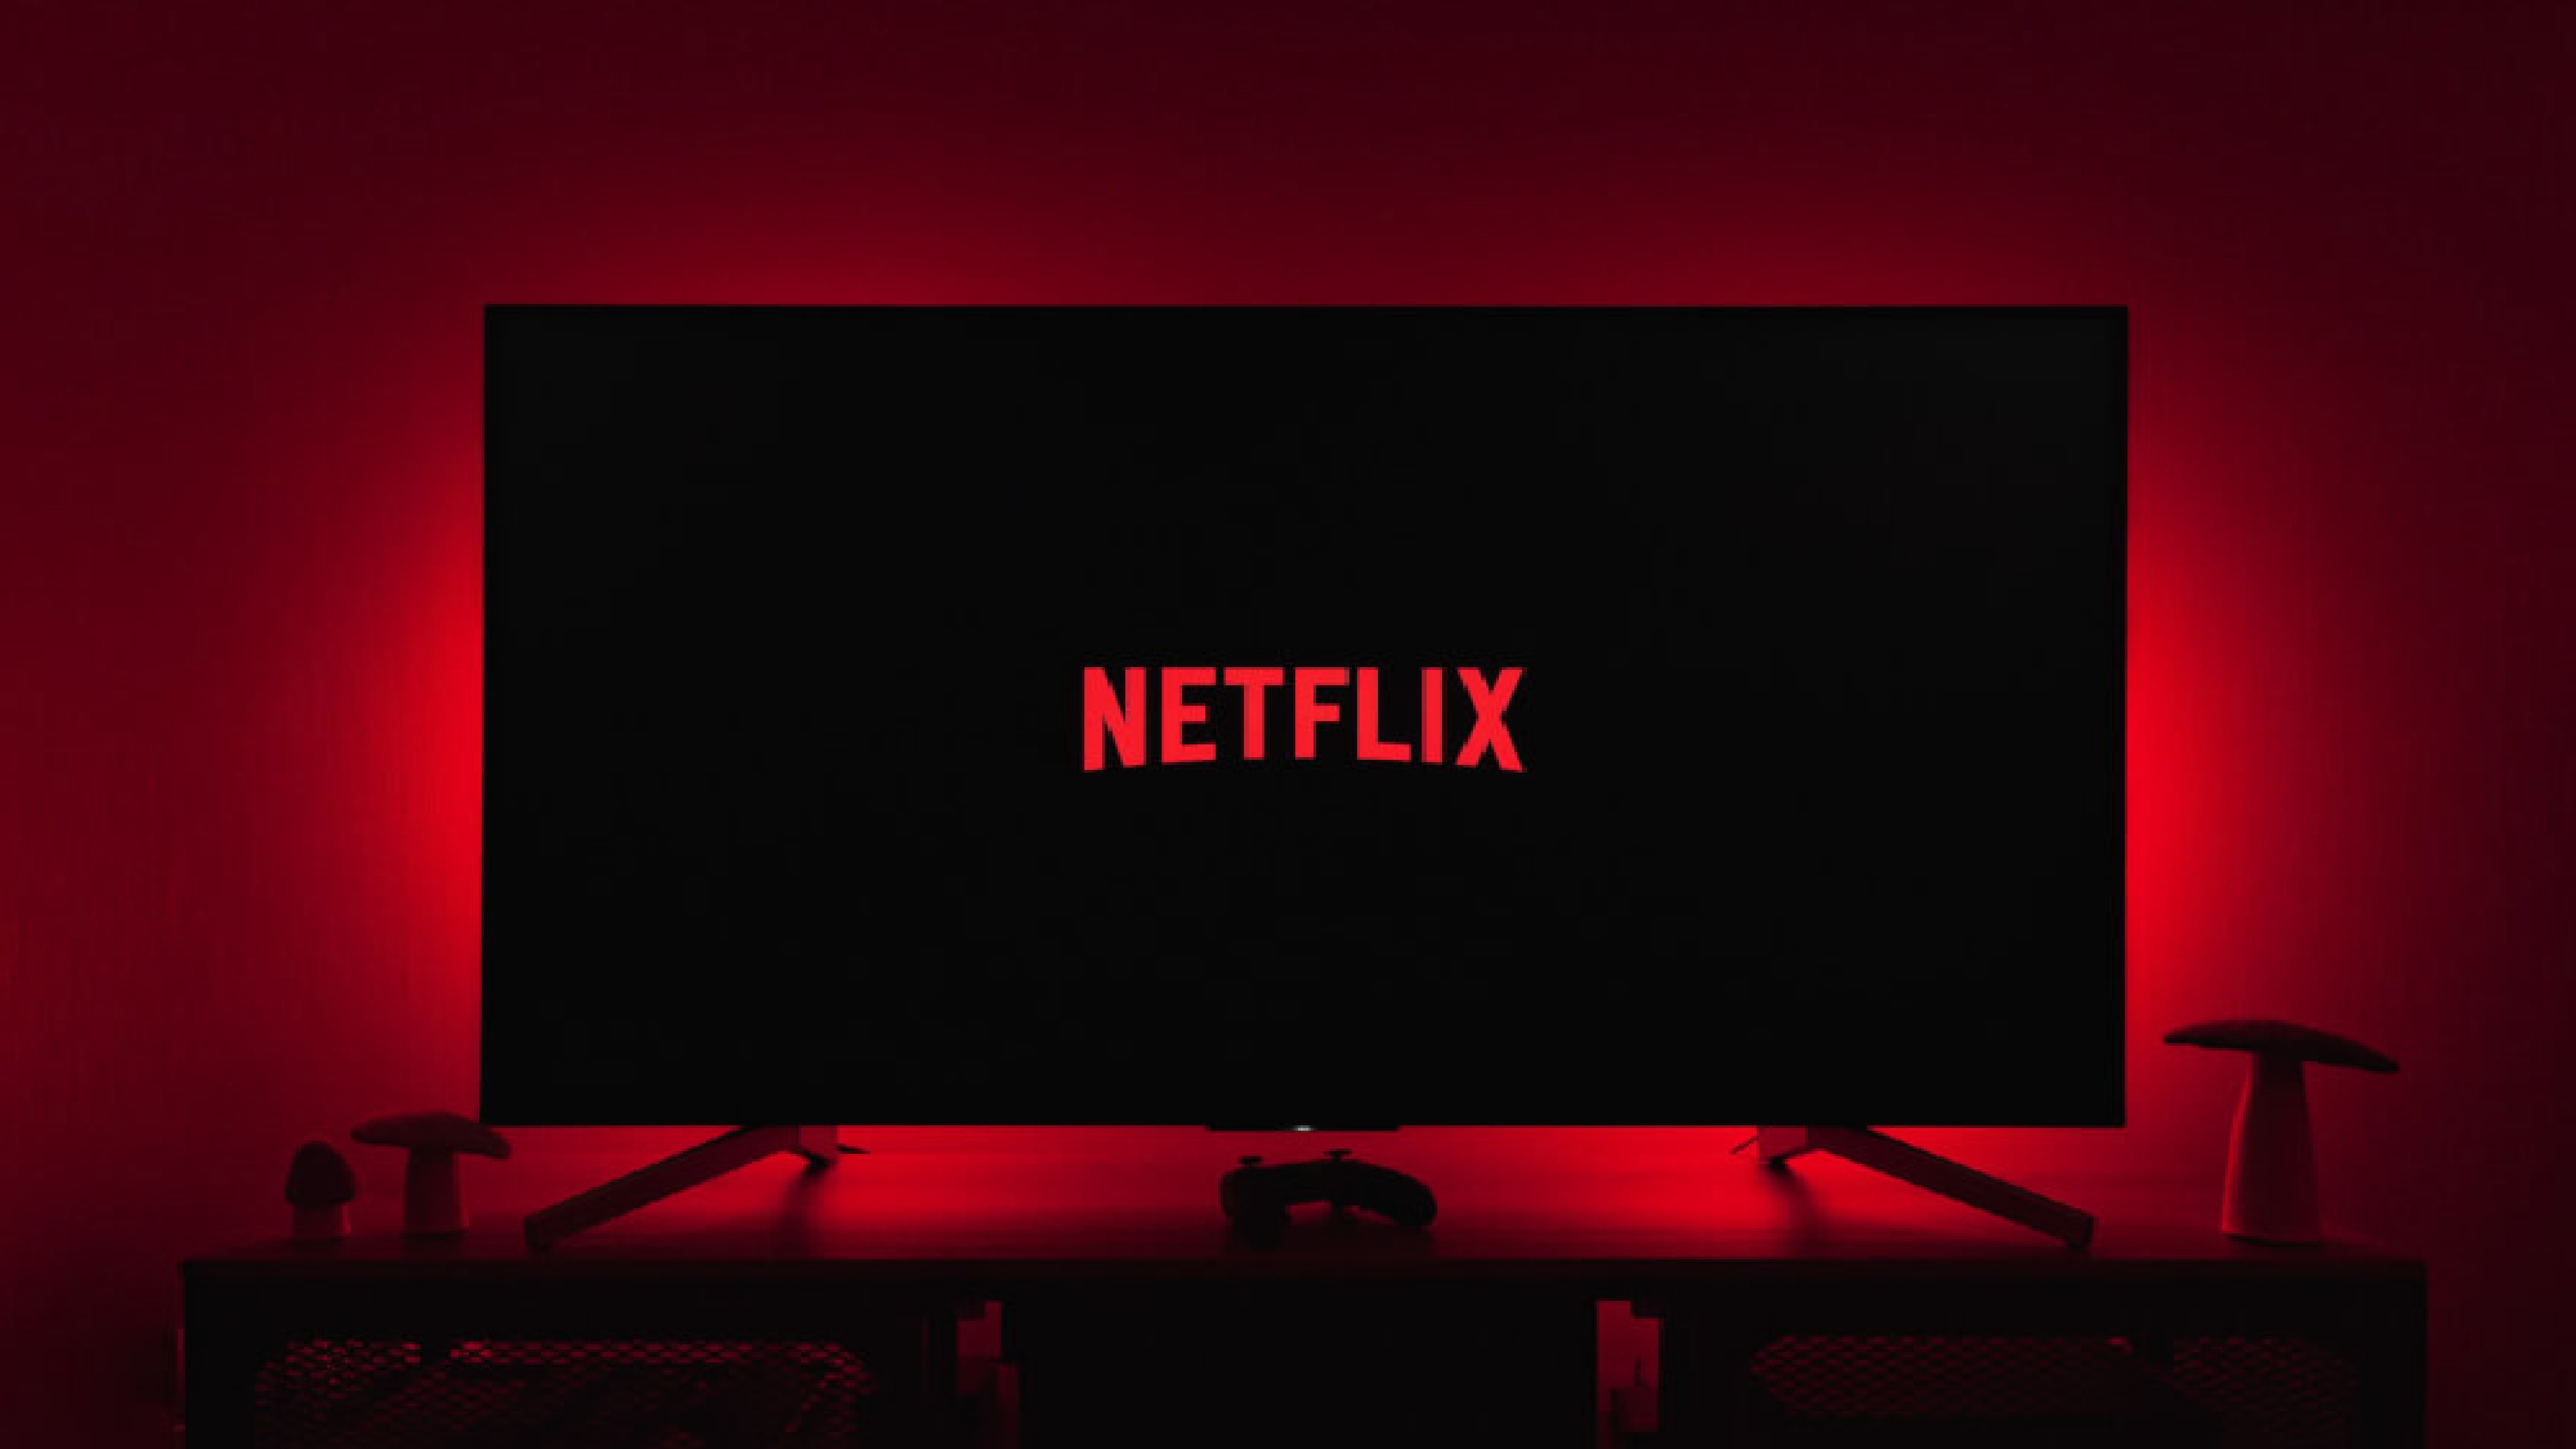 Netflix logo illuminating a room in red, symbolizing its global streaming presence